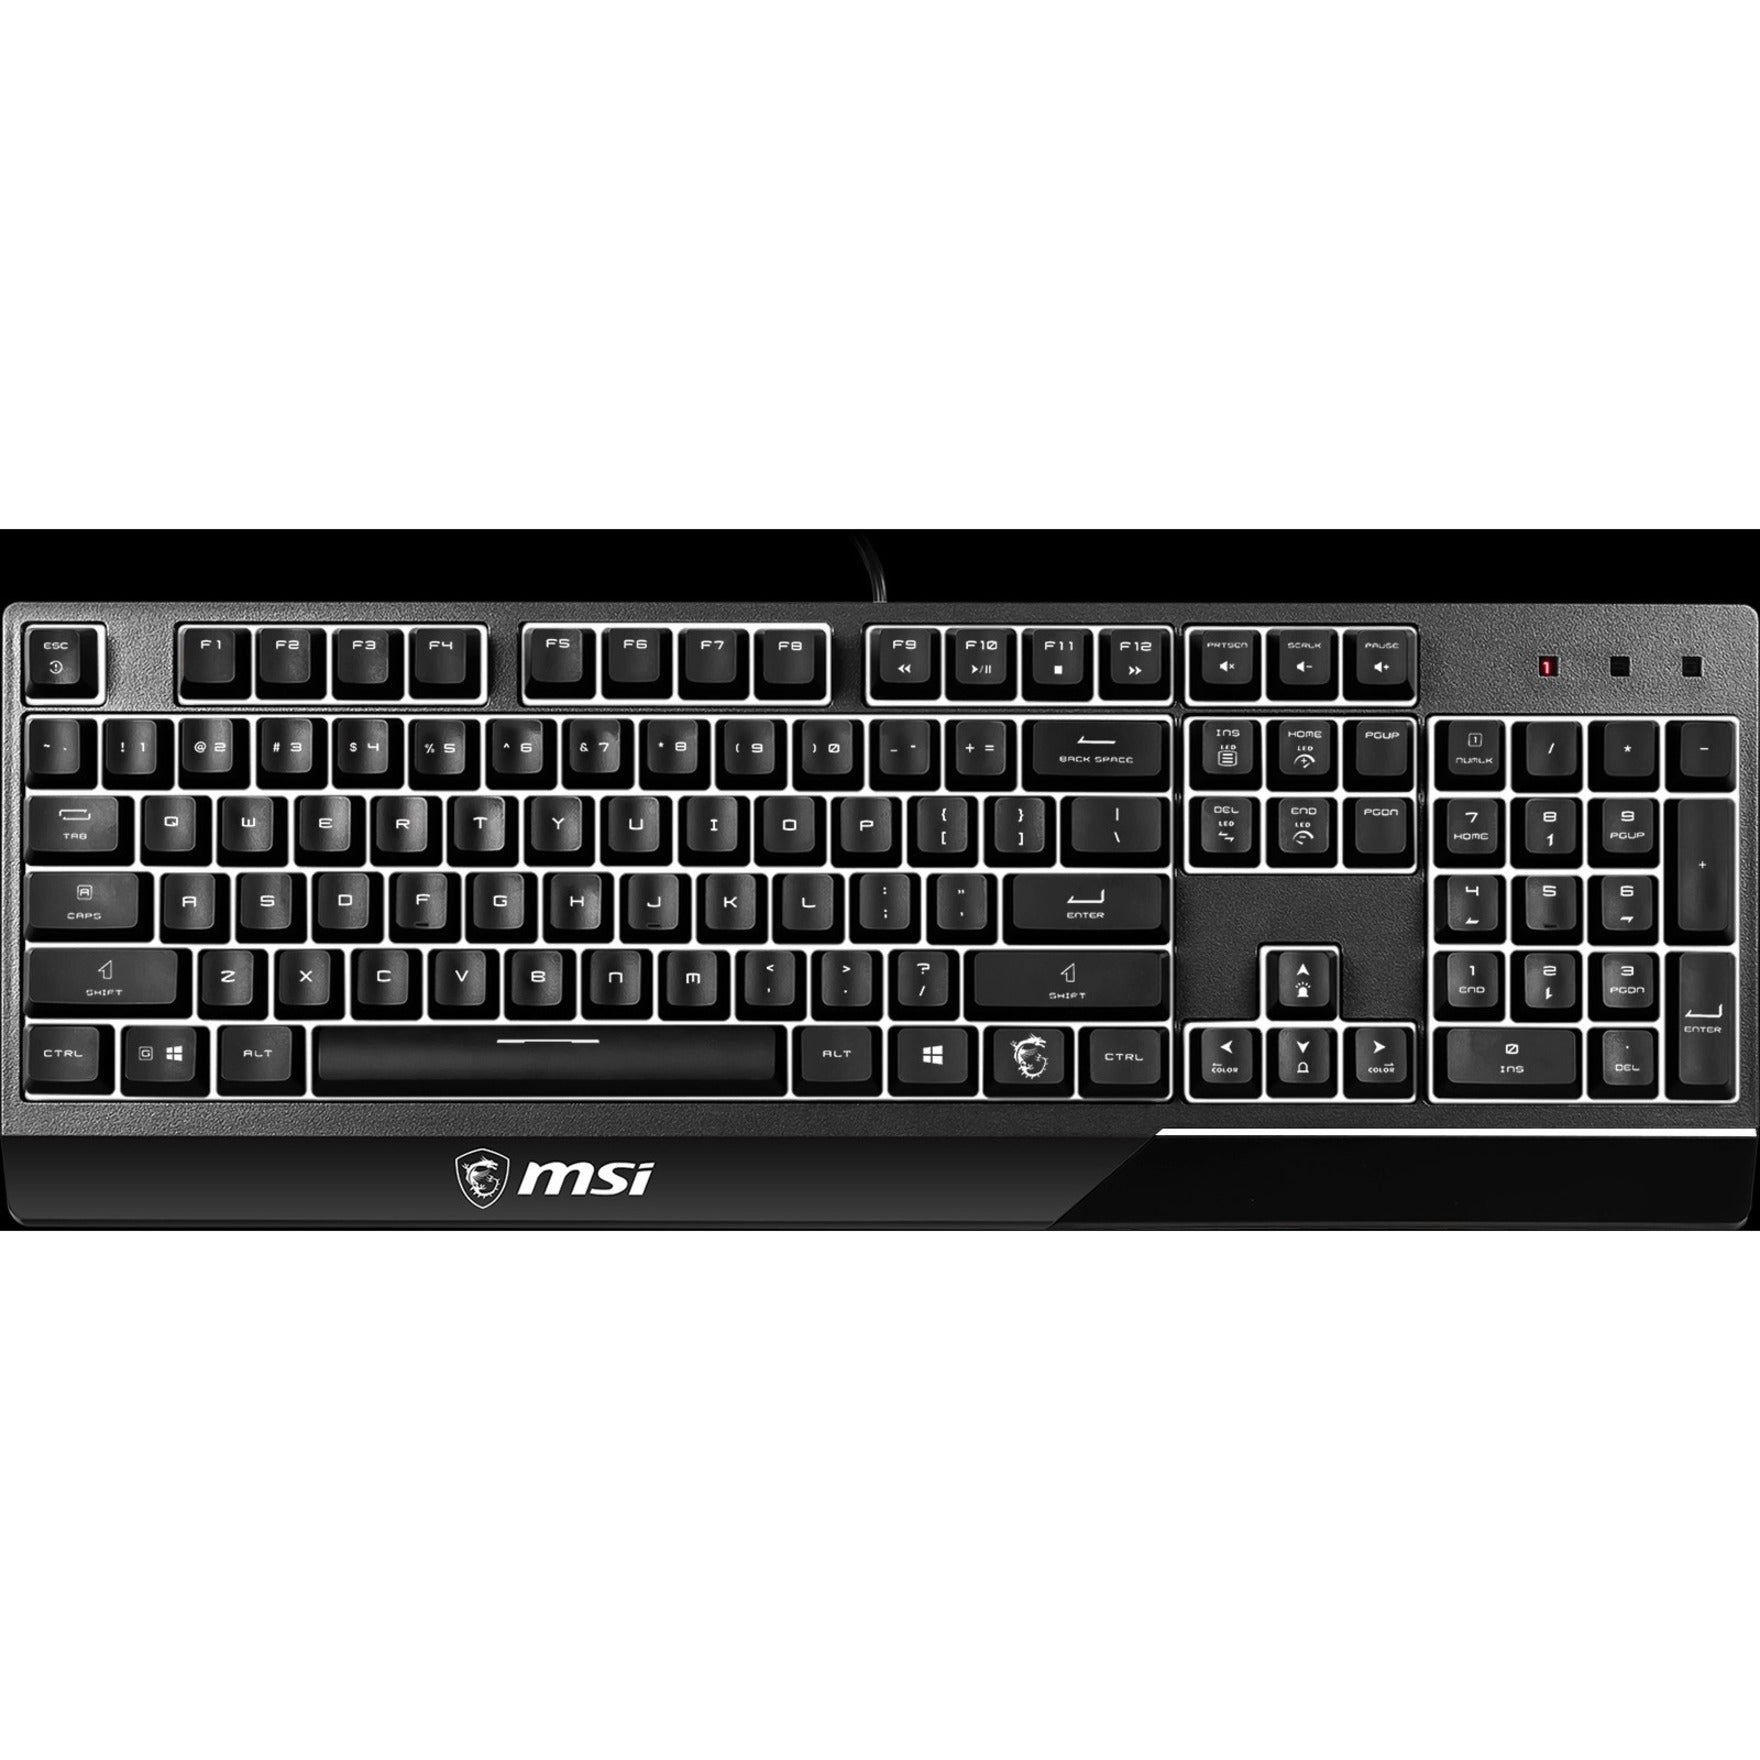 MSI VIGOR GK30 Gaming Keyboard, RGB Backlight, Plunger Keyswitch Technology, Water Resistant